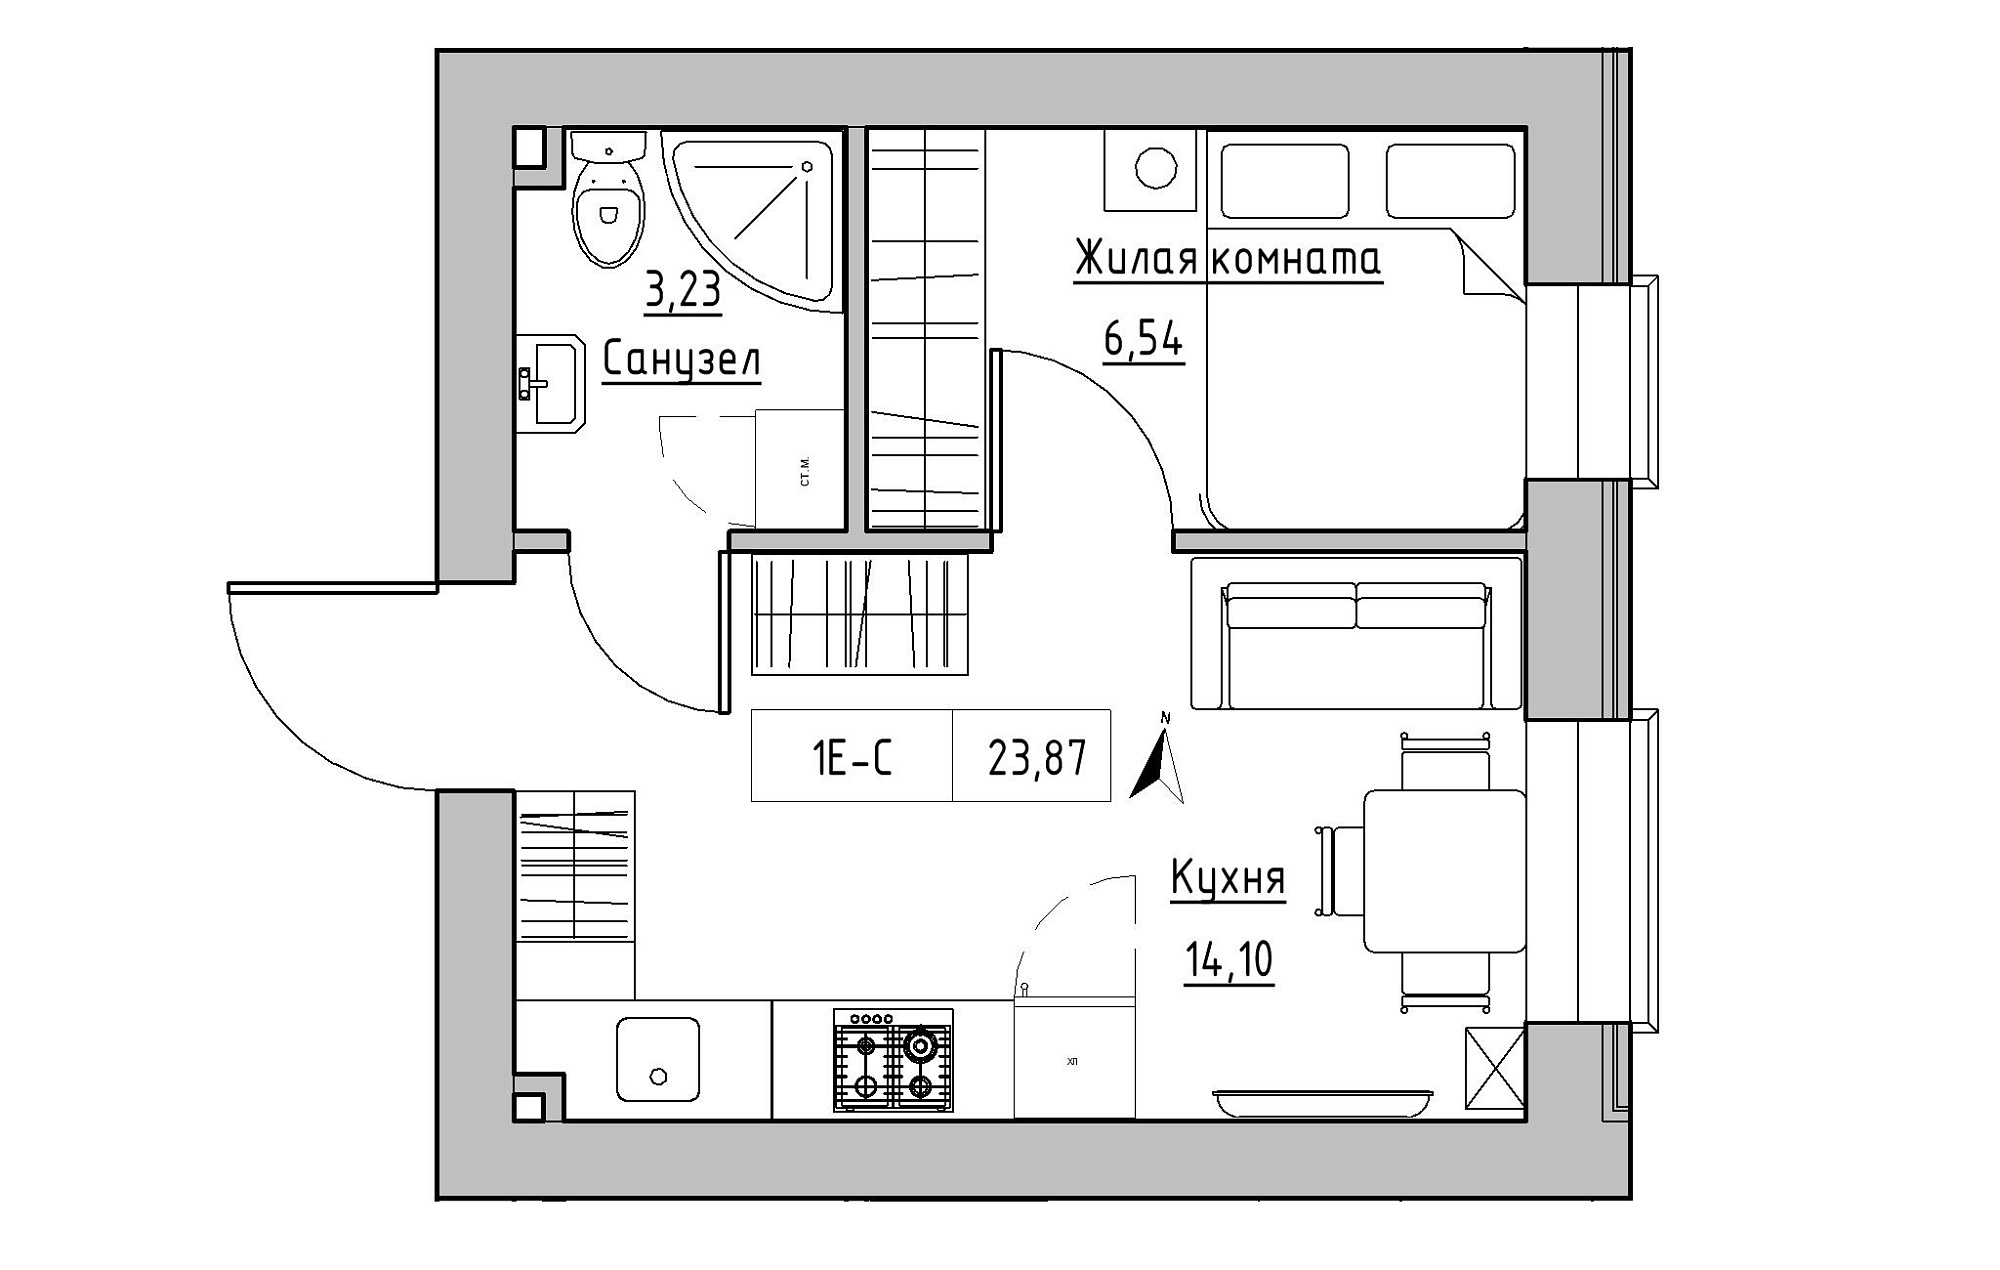 Planning 1-rm flats area 23.87m2, KS-019-02/0004.